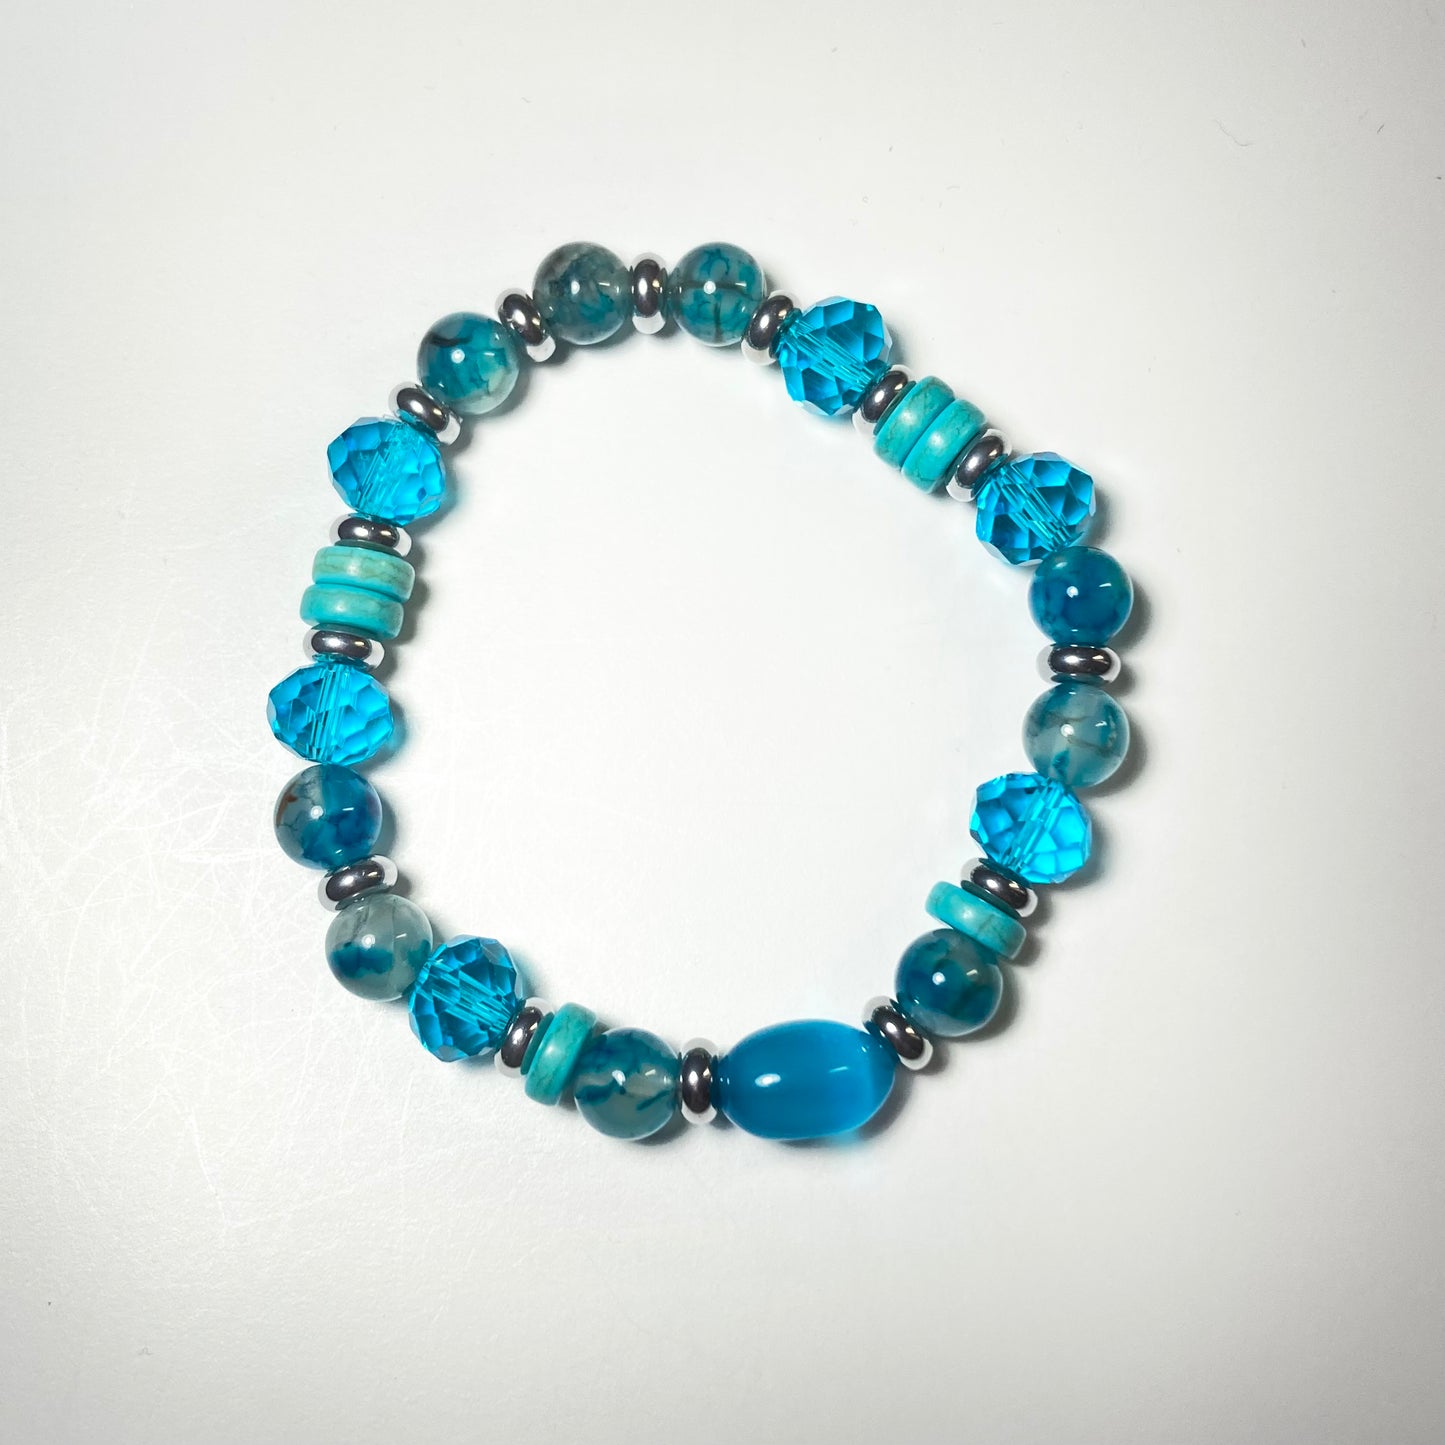 B24-49 - Turquoise Blue & Silver Stretch Bracelet